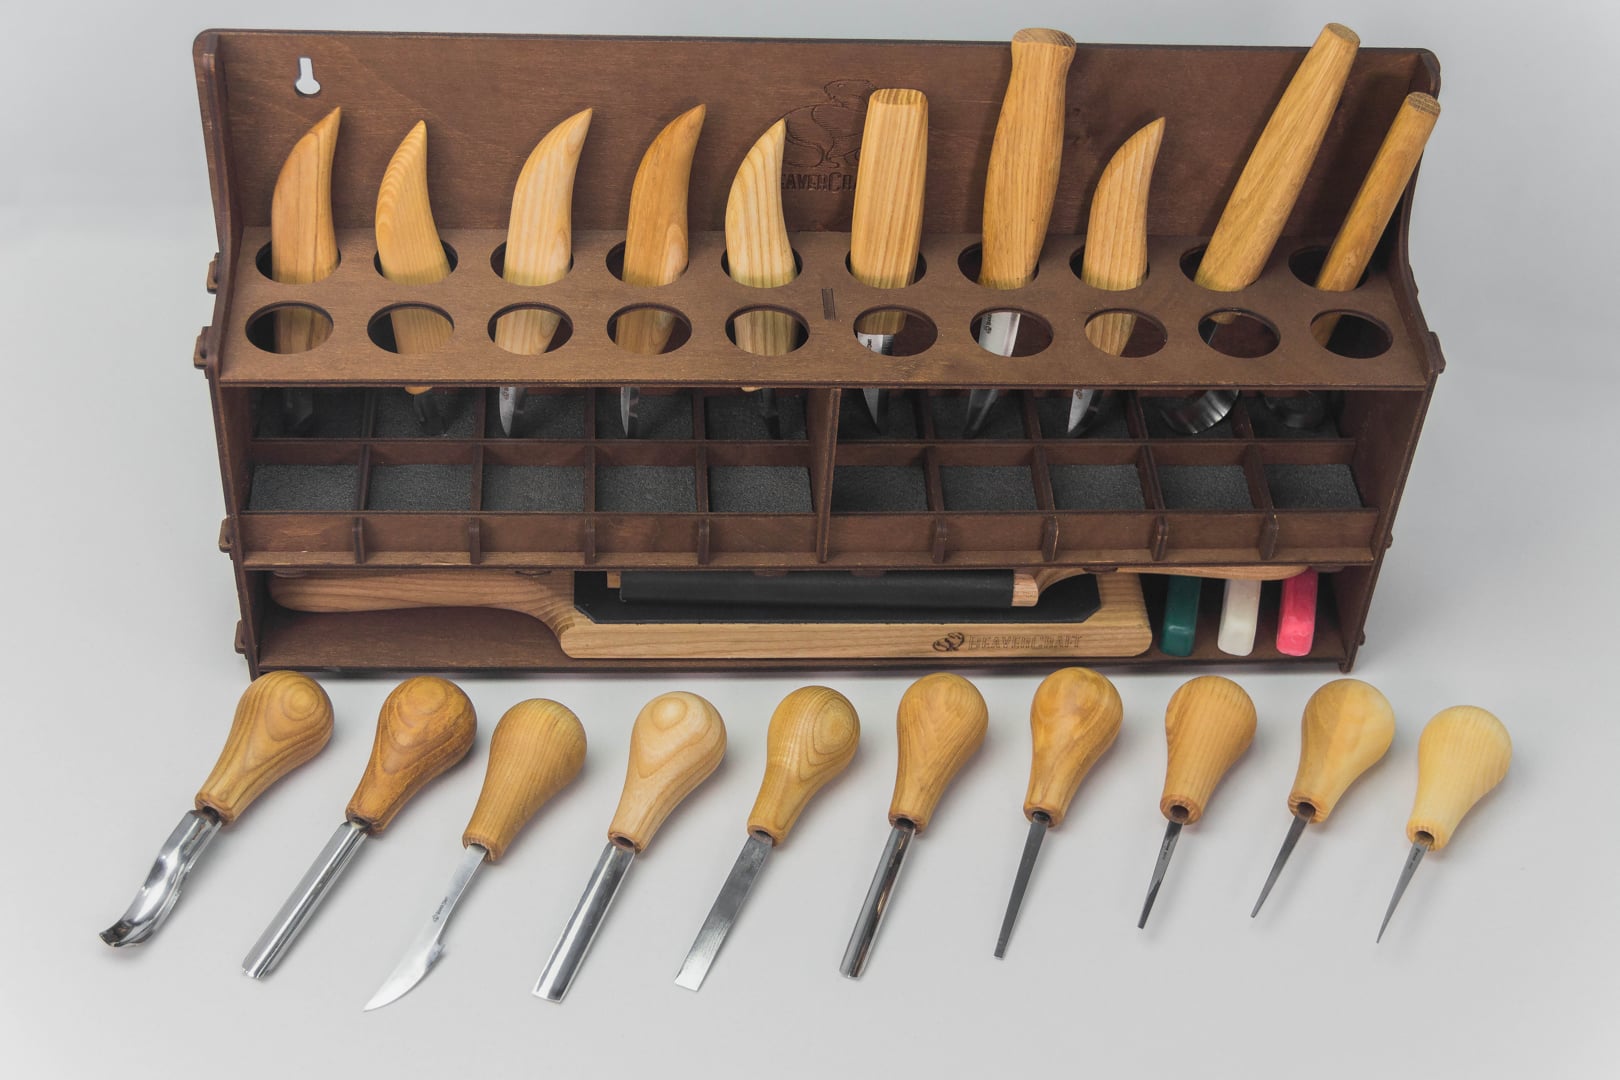 Wood Carving Tool Sets – BeaverCraft Tools